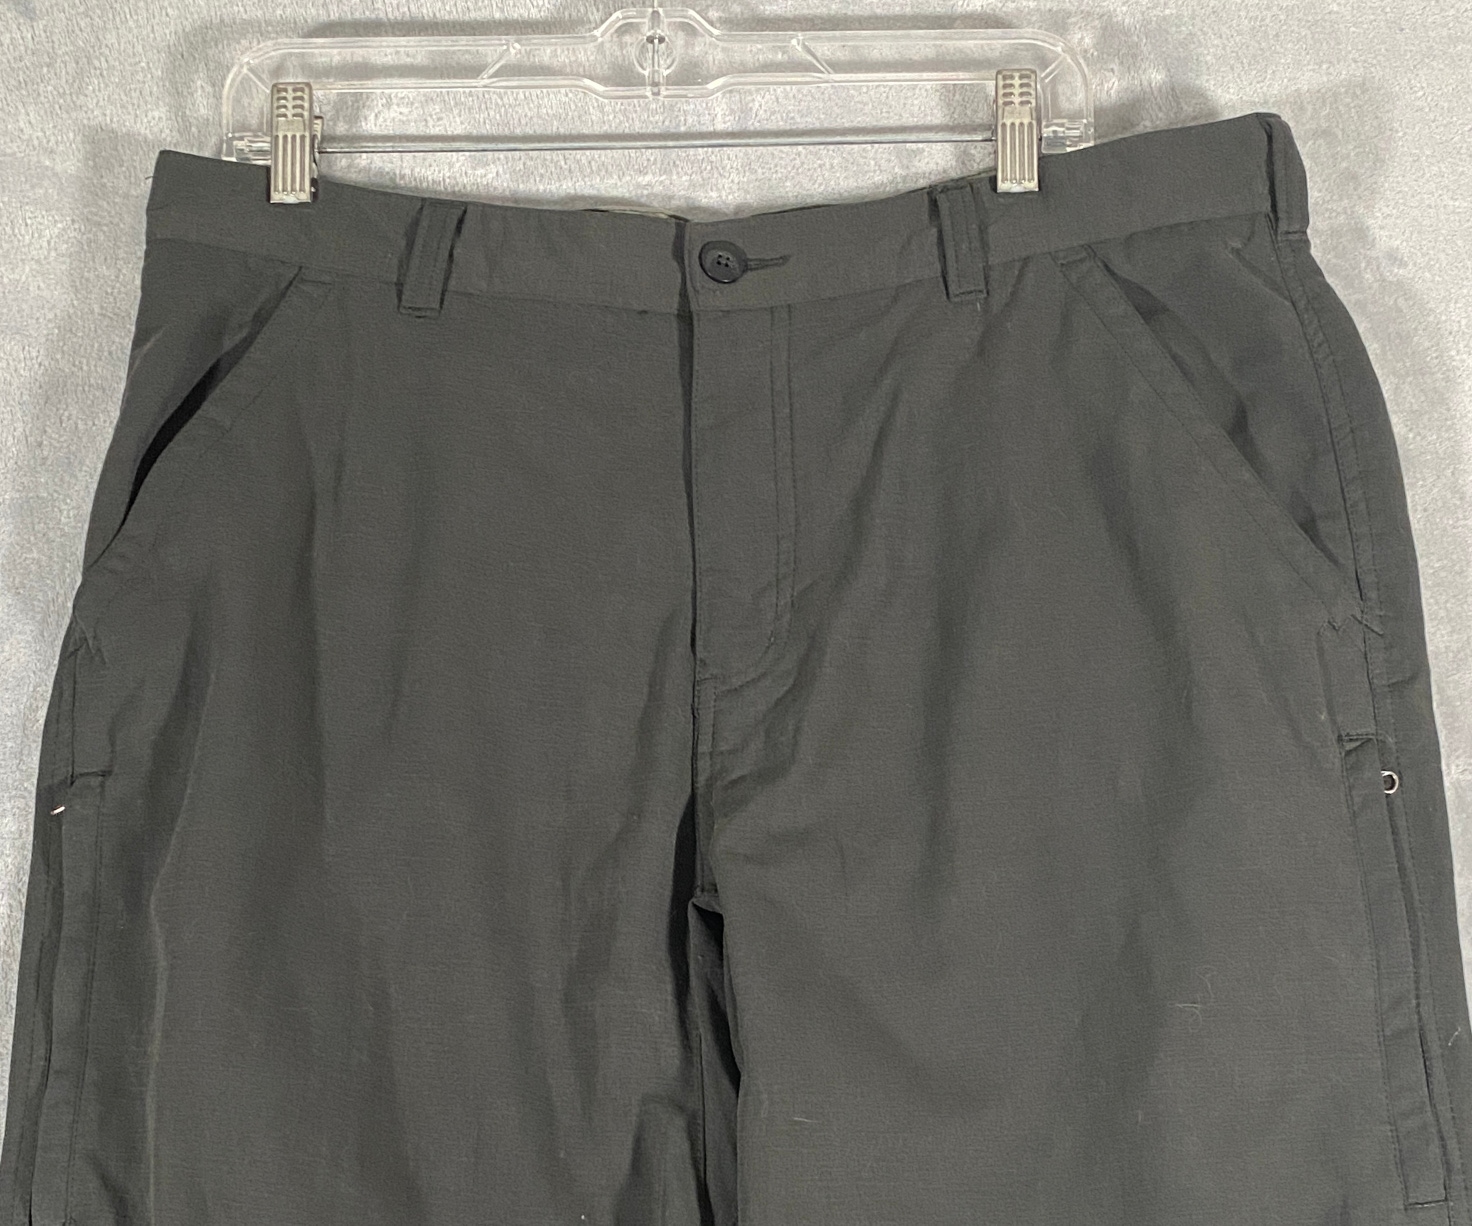 REI Pants Mens Size 40x32 Black Cargo Zipper Pockets 100% Nylon UPF 50+ Hiking